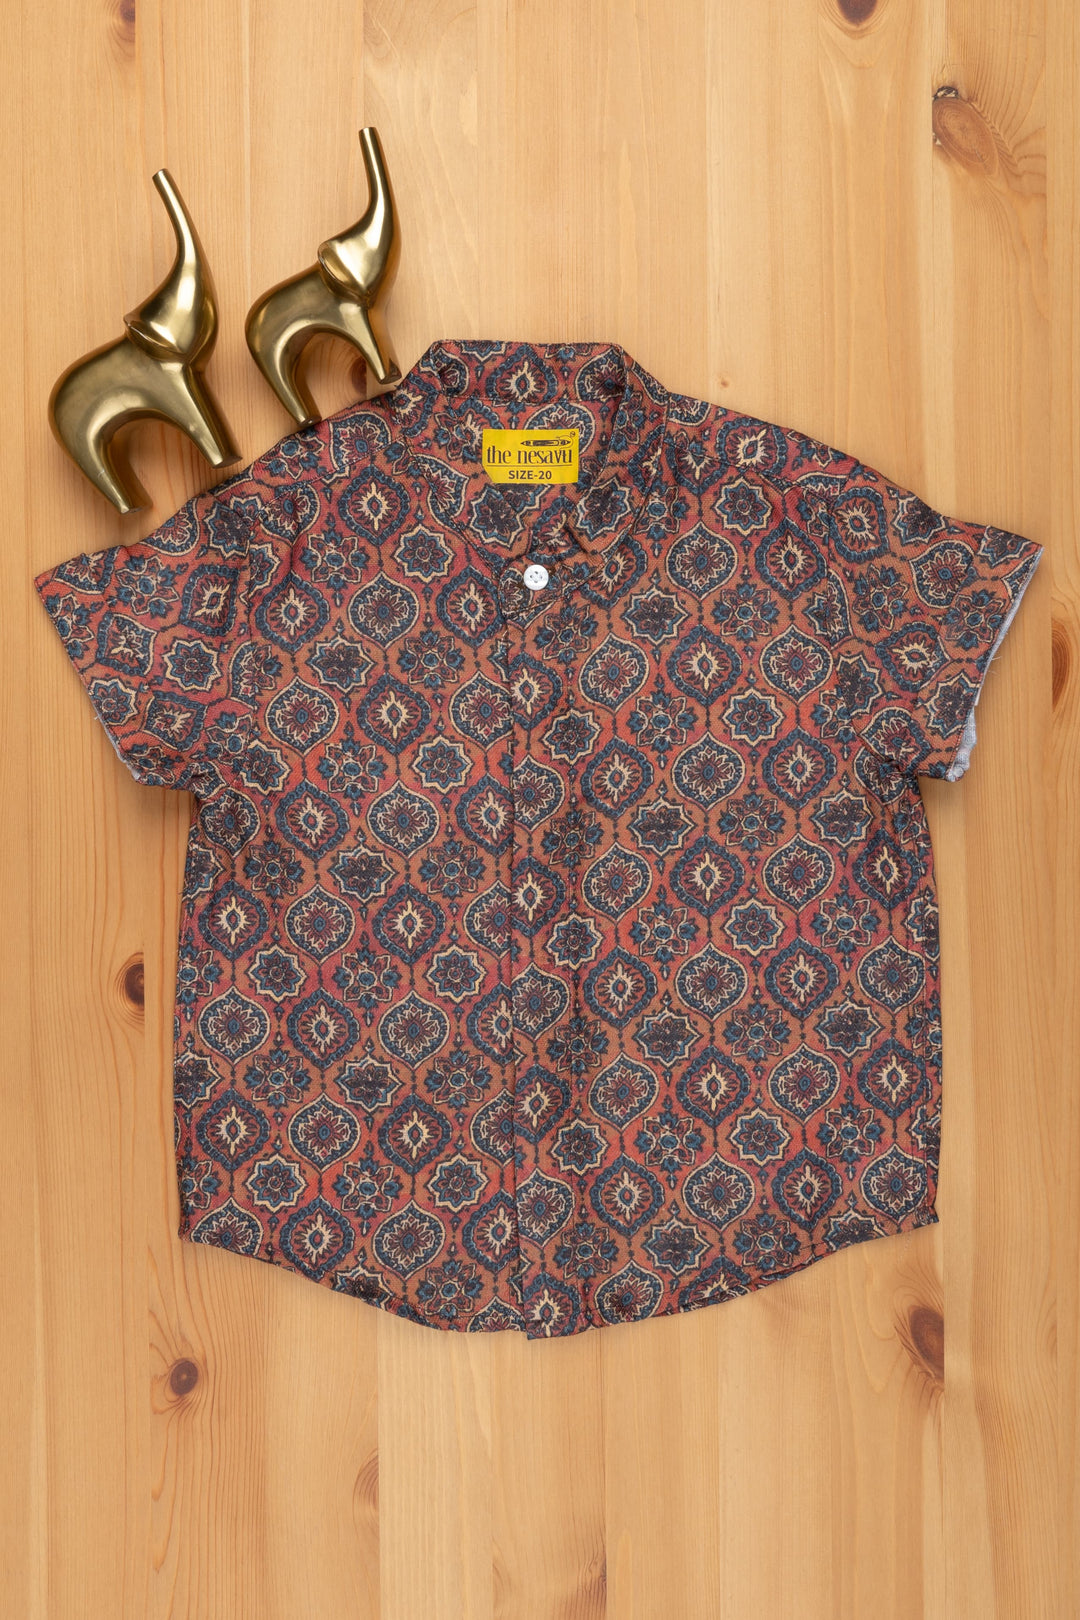 The Nesavu Boys Linen Shirt Rustic Appeal: Ajrakh Hand Block Print Boys' Shirt for a Vintage-Inspired Look Nesavu 14 (6M) / multicolor / Linen BS062 Ajrakh Hand Block Printed Boys Shirt | Baby Boys Shirt | The Nesavu